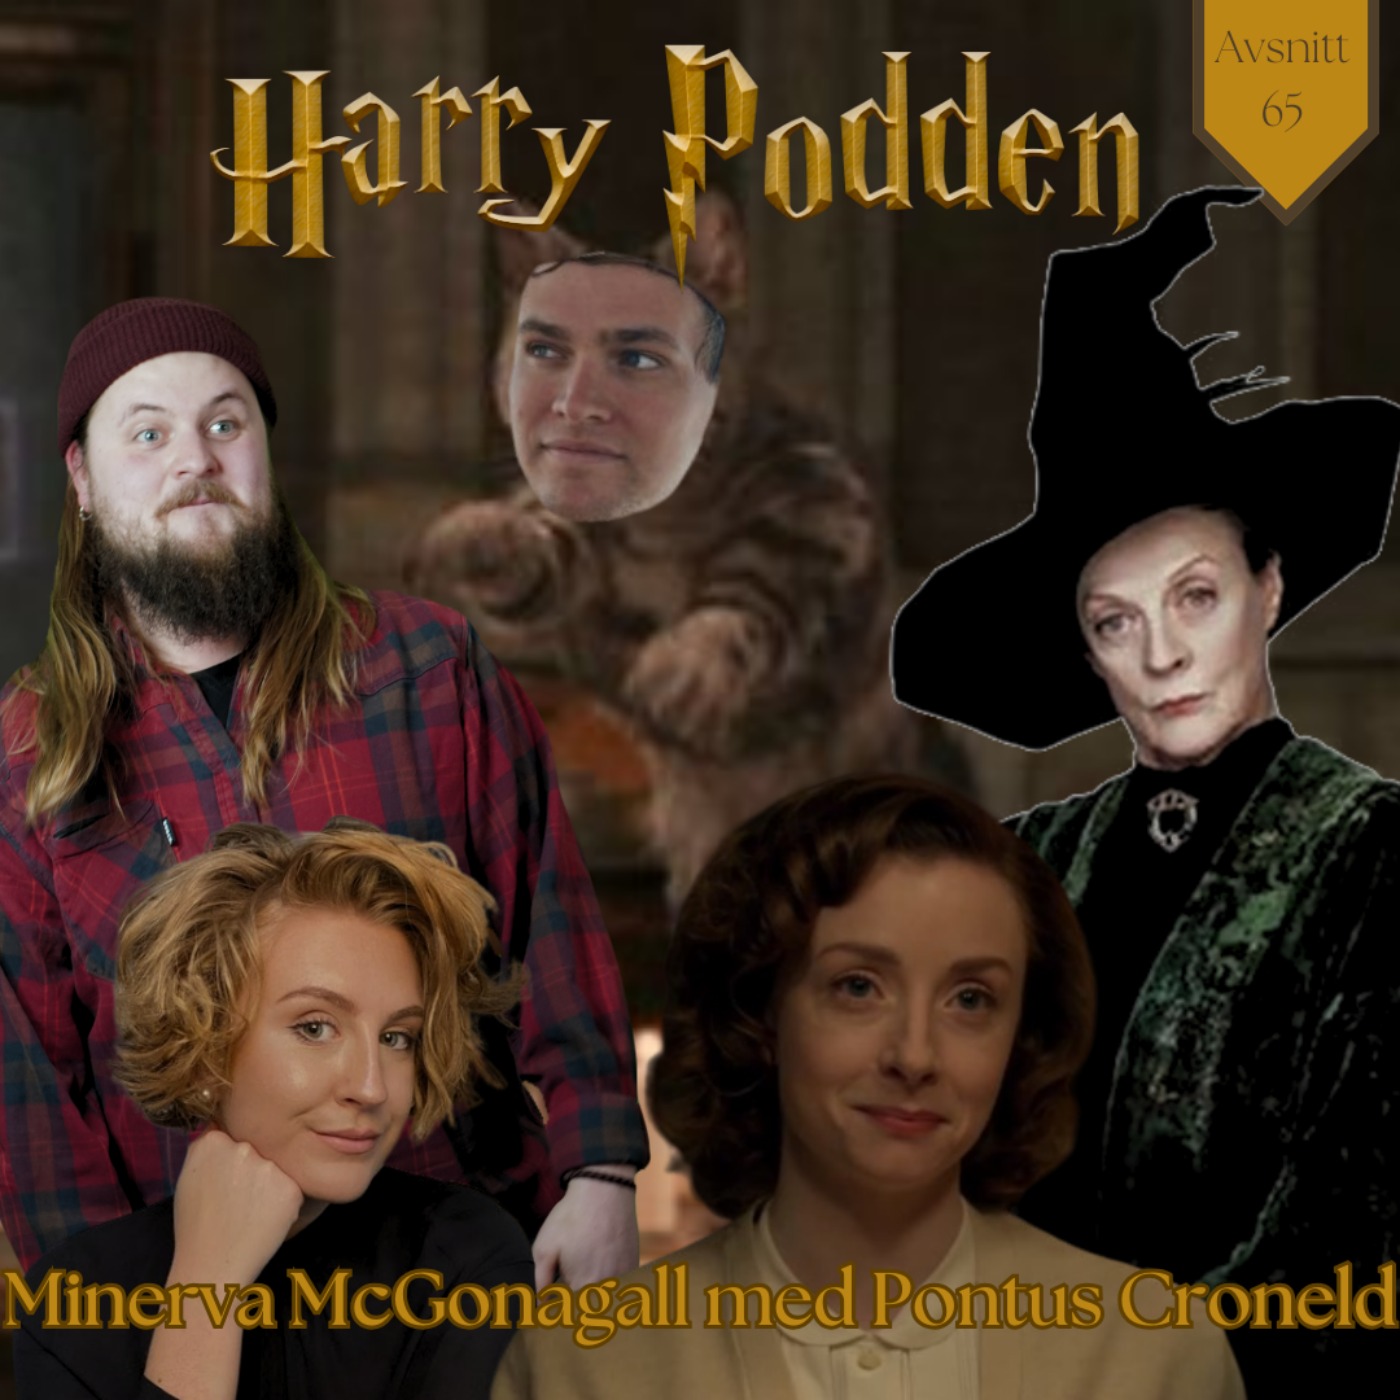 Minerva McGonagall med Pontus Croneld